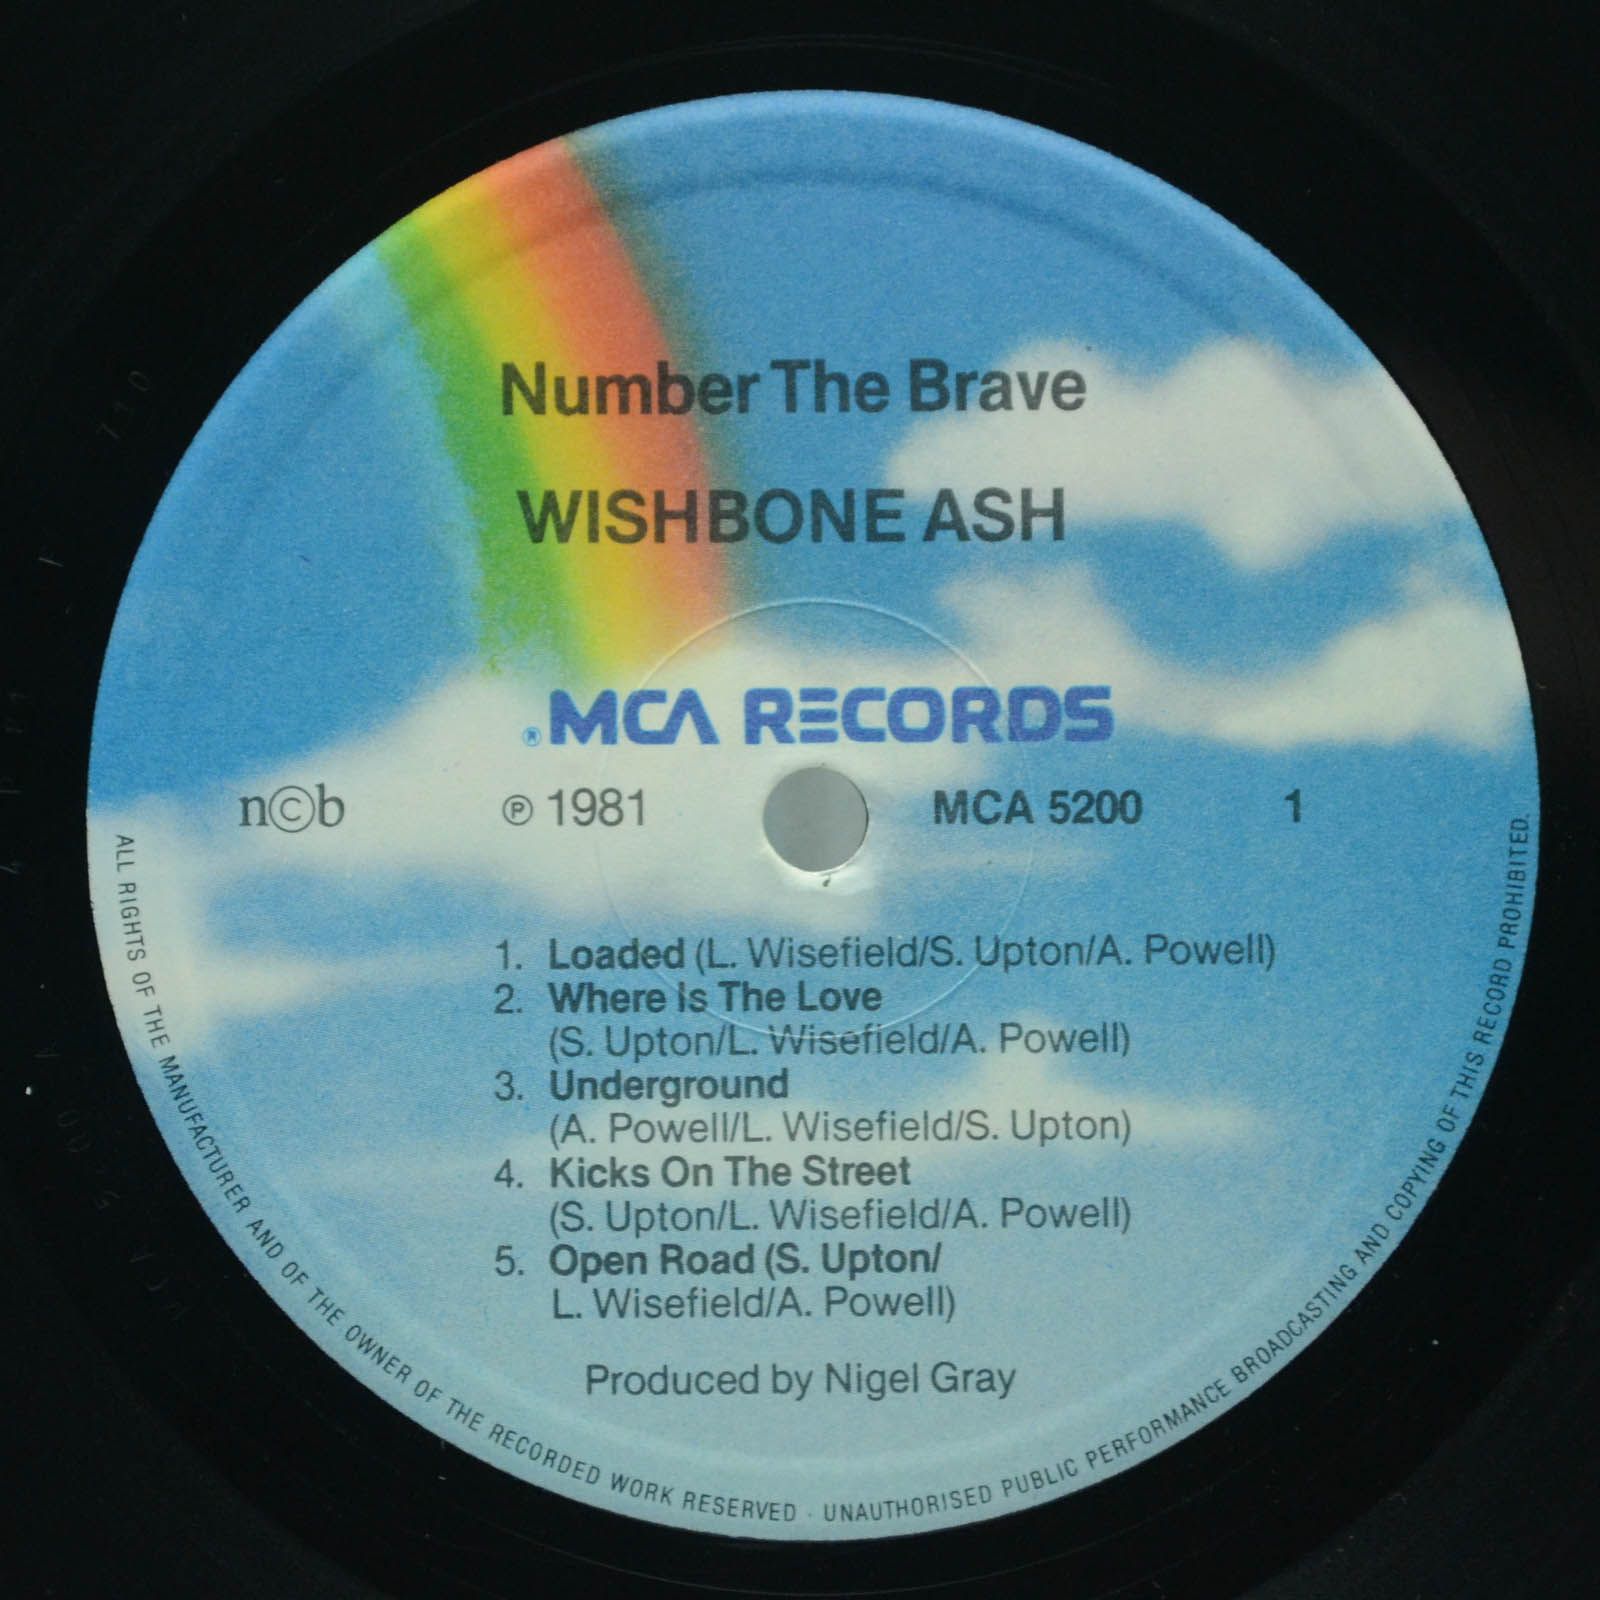 Wishbone Ash — Number The Brave, 1981